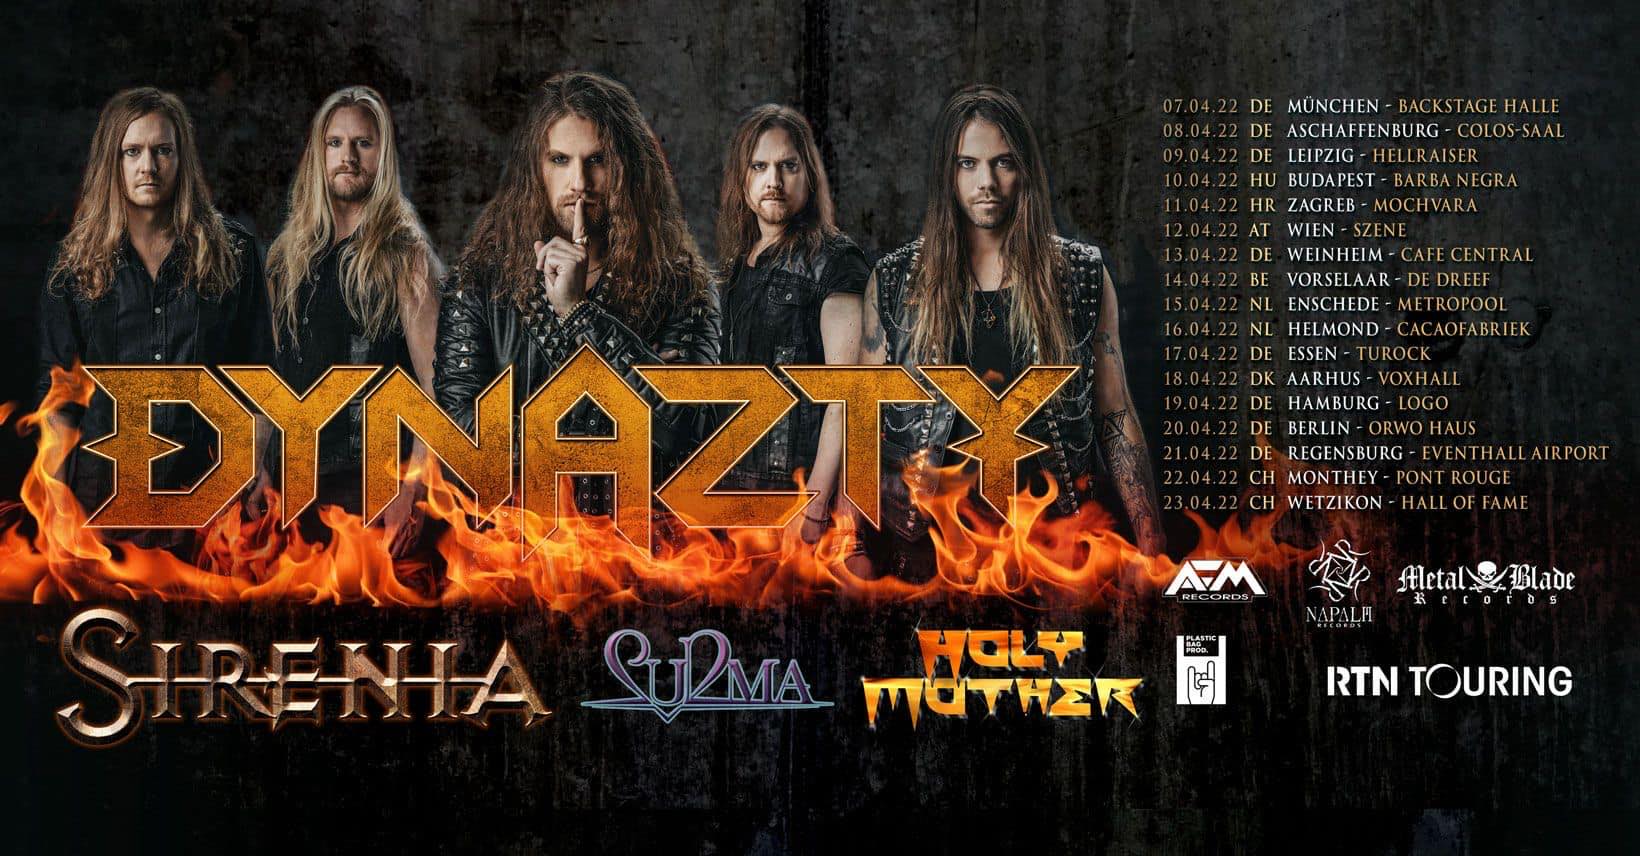 dynazty-symphonic-metalsturm-durch-europa-tour-mit-serenia-souma-und-holy-mother-im-april-2022